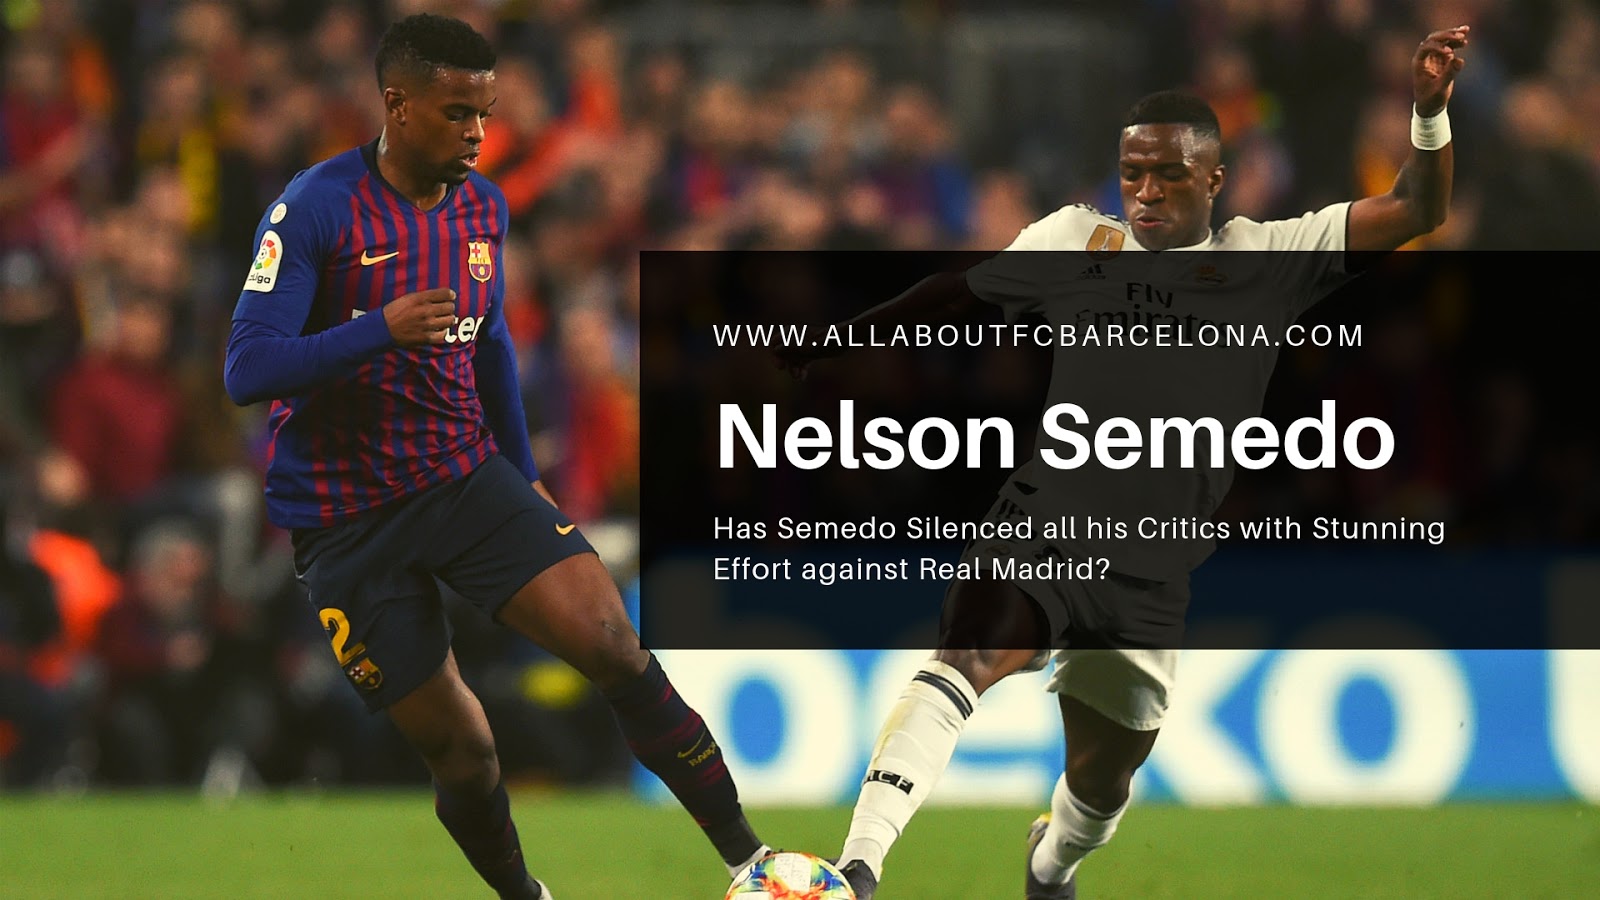 Has Semedo Silenced all his Critics with Stunning Effort against Real? #NelsonSemedo #Barca